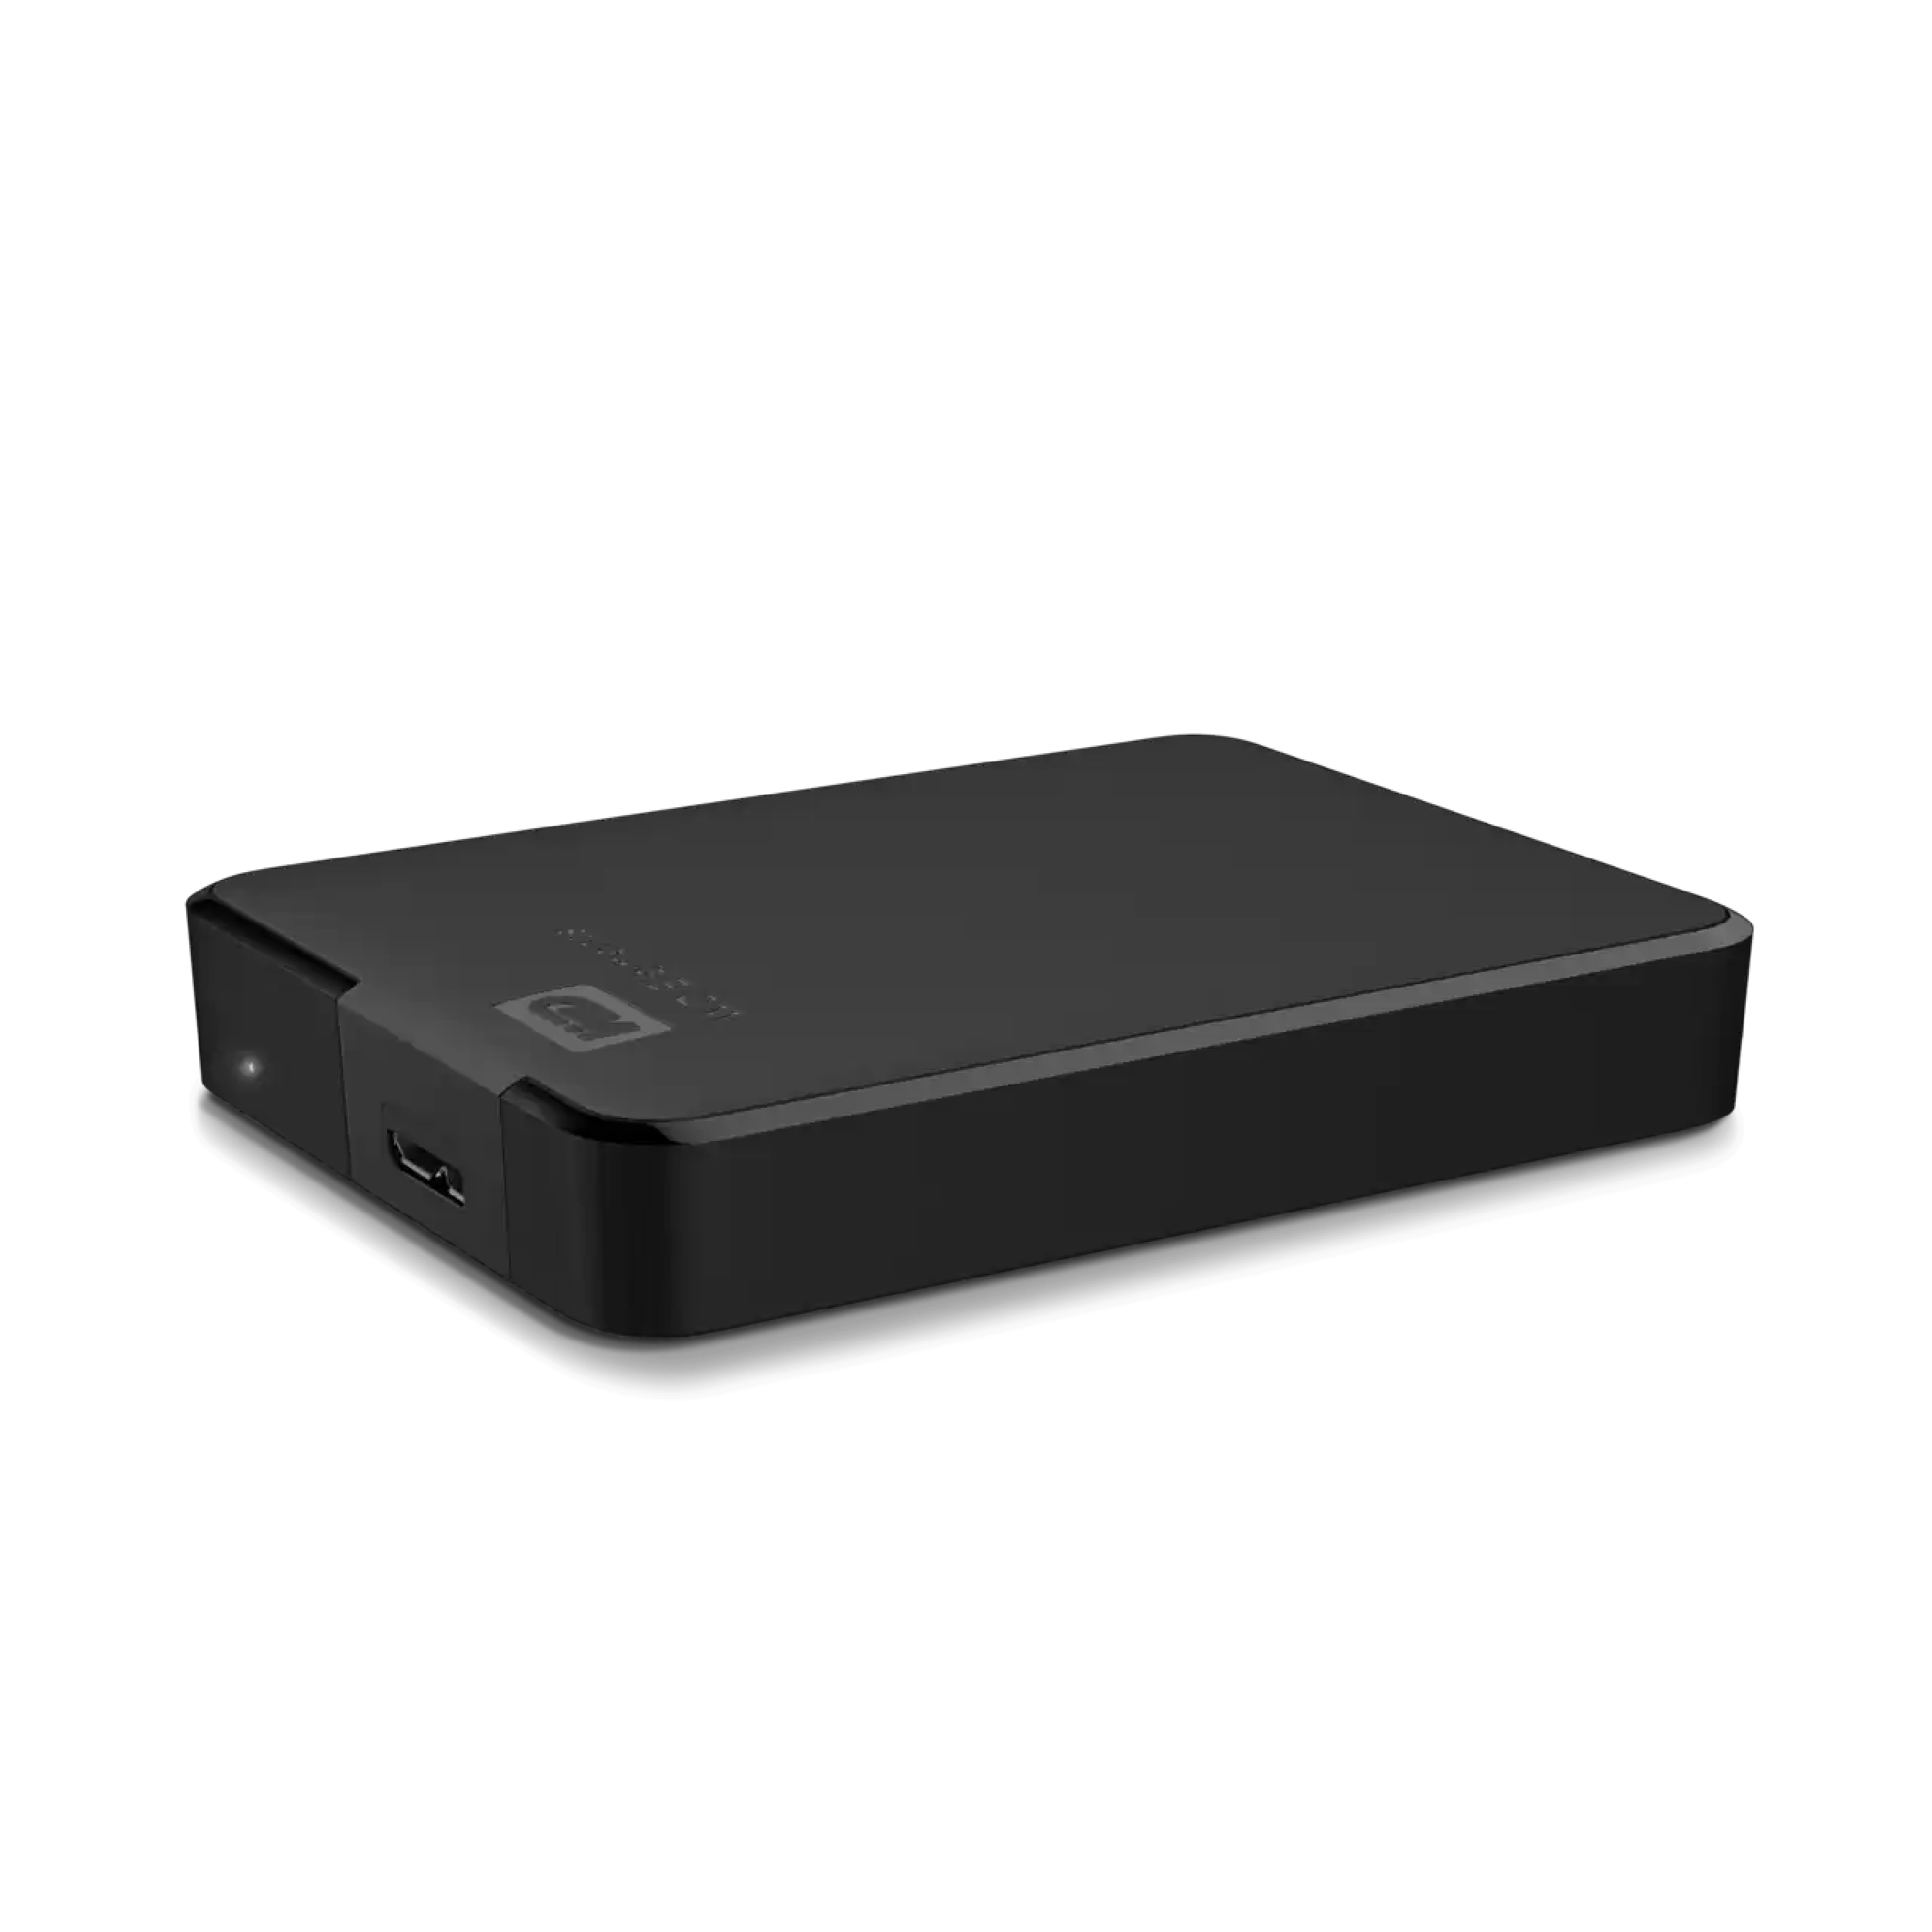 WD Elements Portable, 3TB, USB 3.0, External Hard Drive, Black (WDBU6Y0030BBK-WESN)